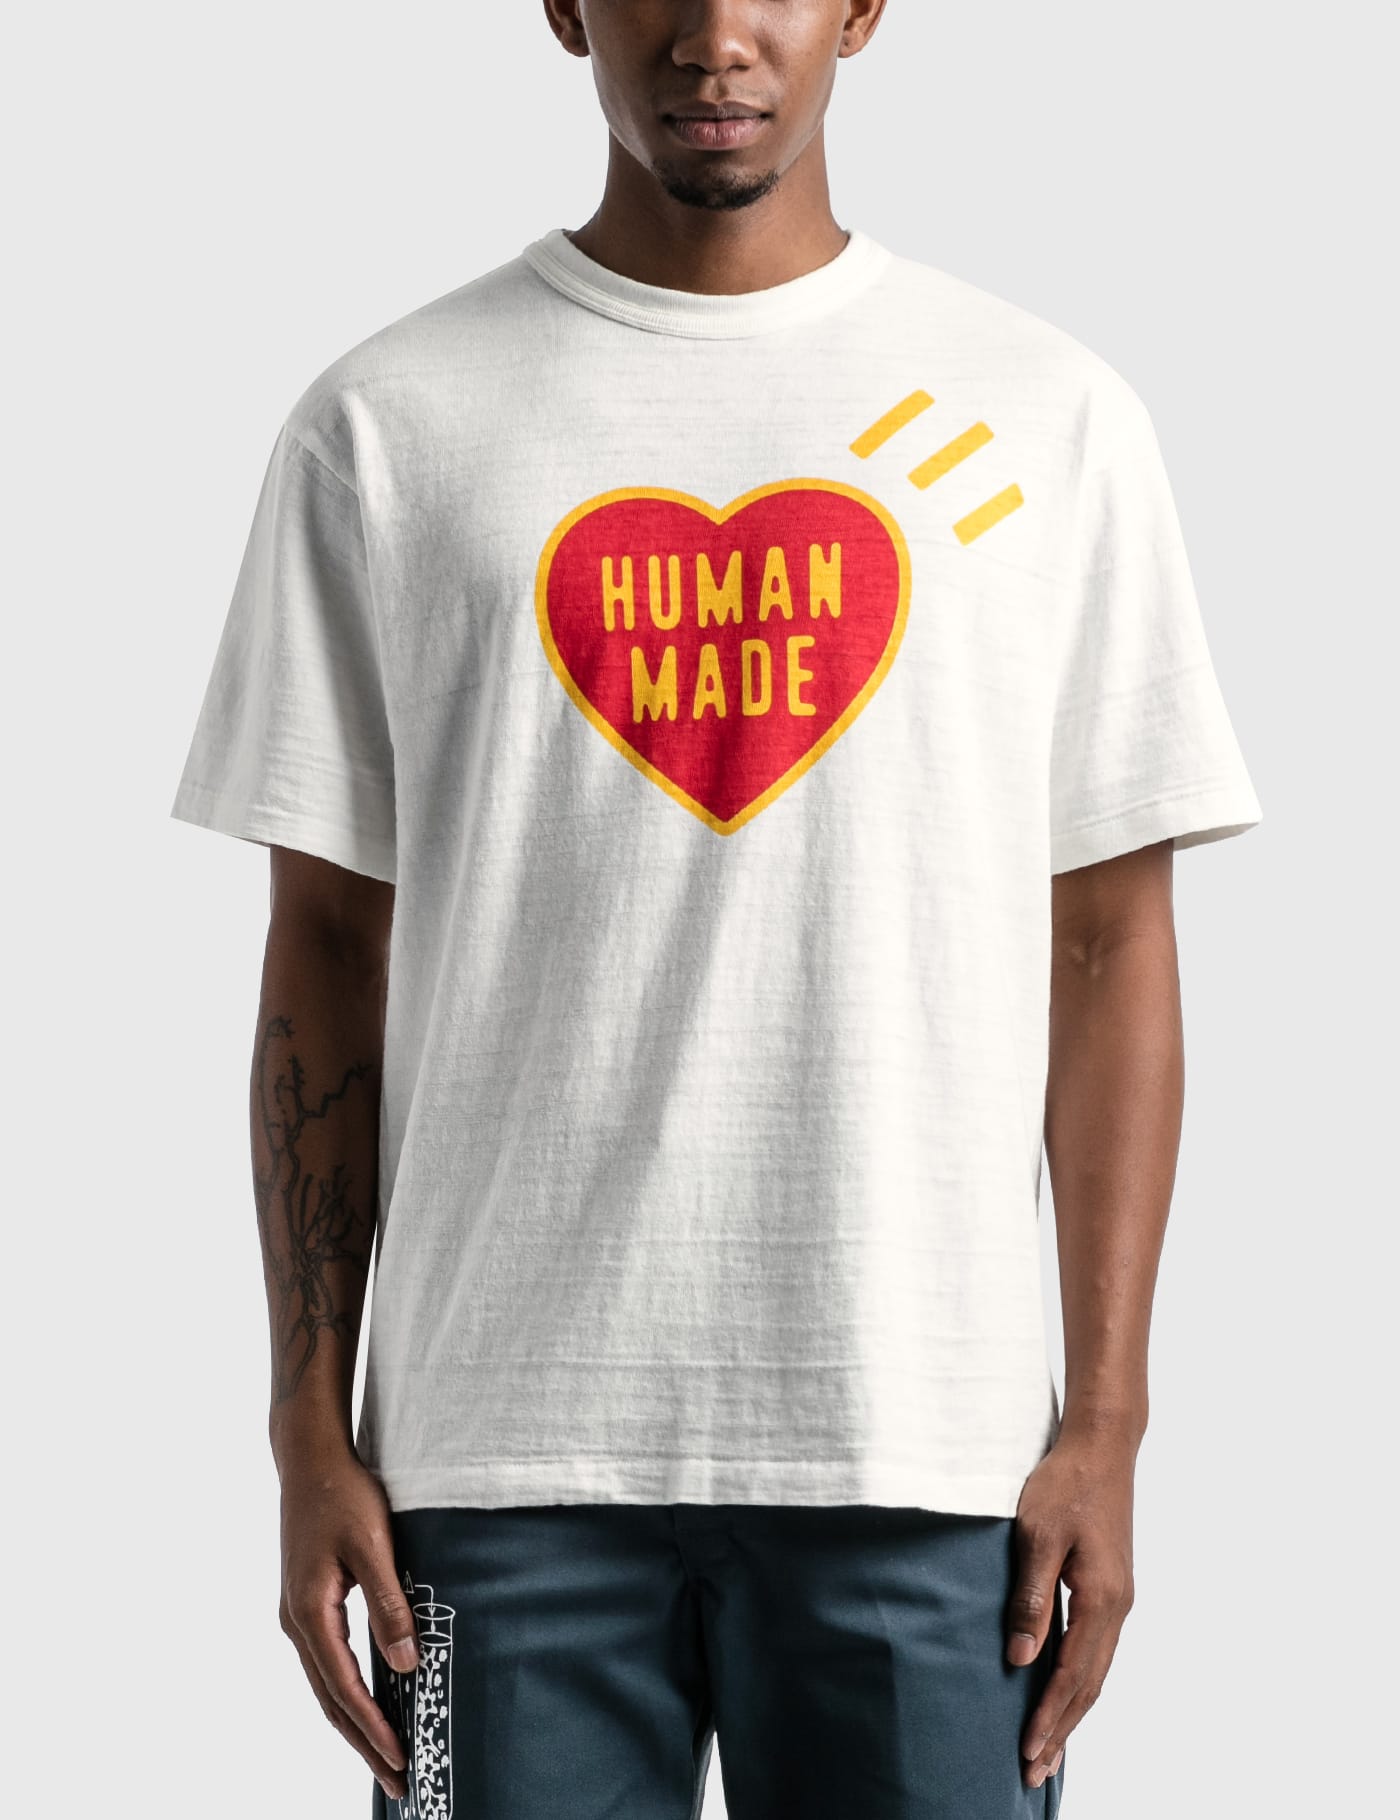 Human Made - T-Shirt #2026 | HBX - ハイプビースト(Hypebeast)が厳選 ...